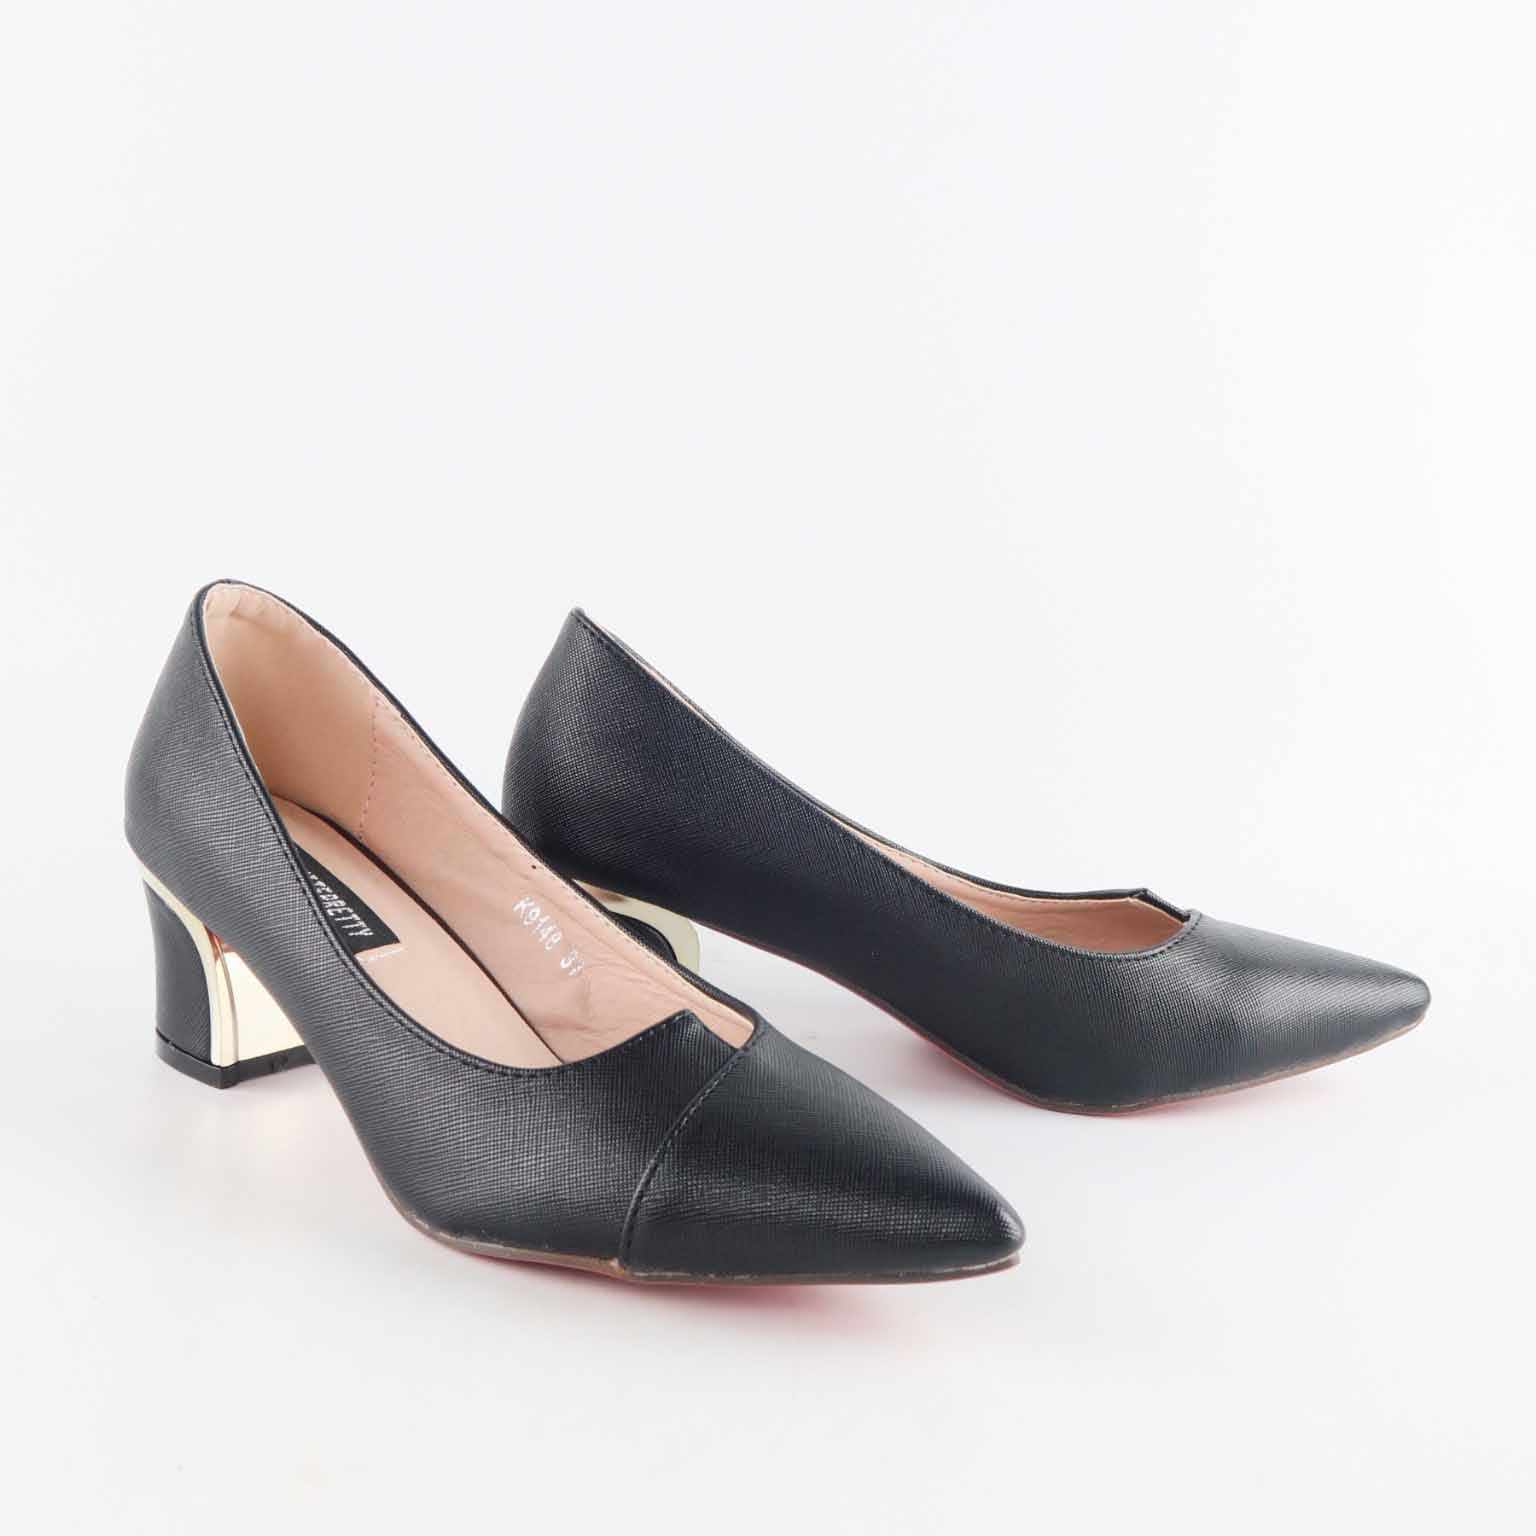 Shoes : Mid Heels (รองเท้าส้นสูง 3-5 cm)